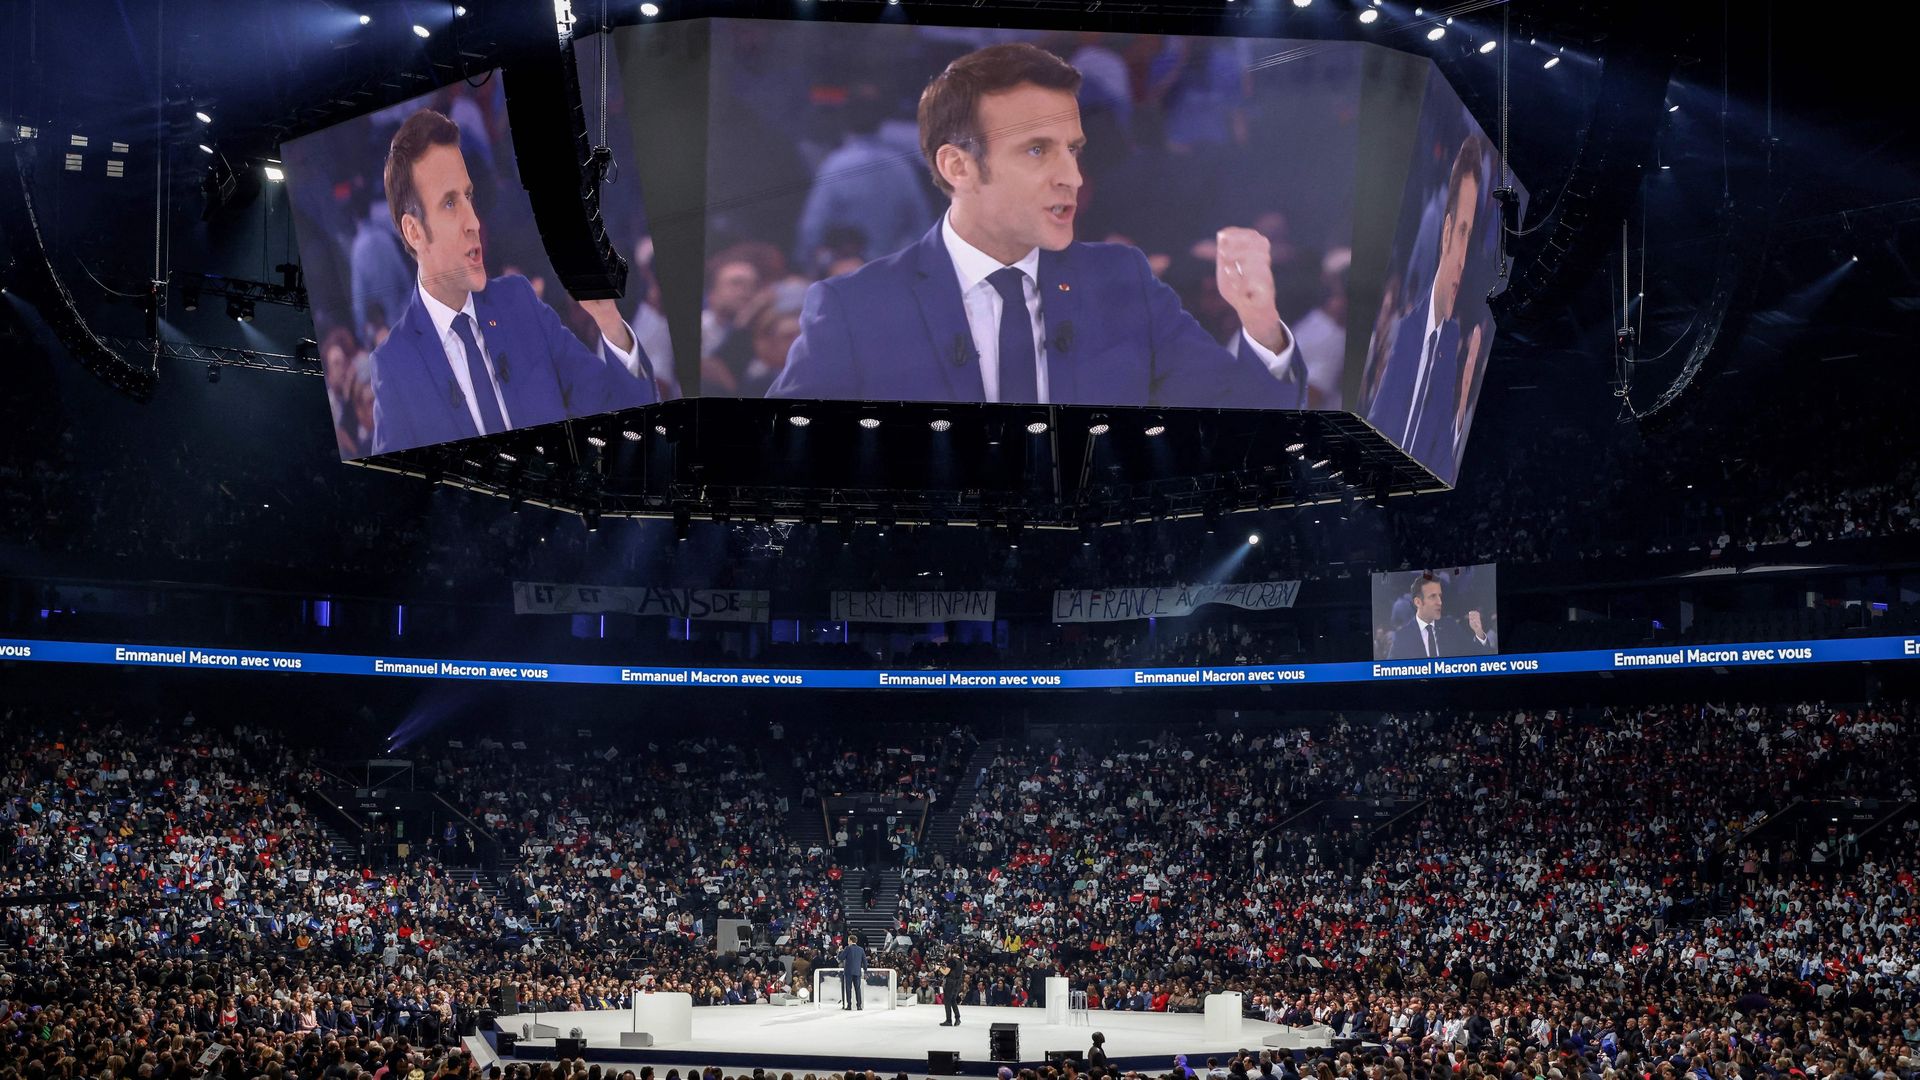 Macron speaking on a jumbotron in an arena.